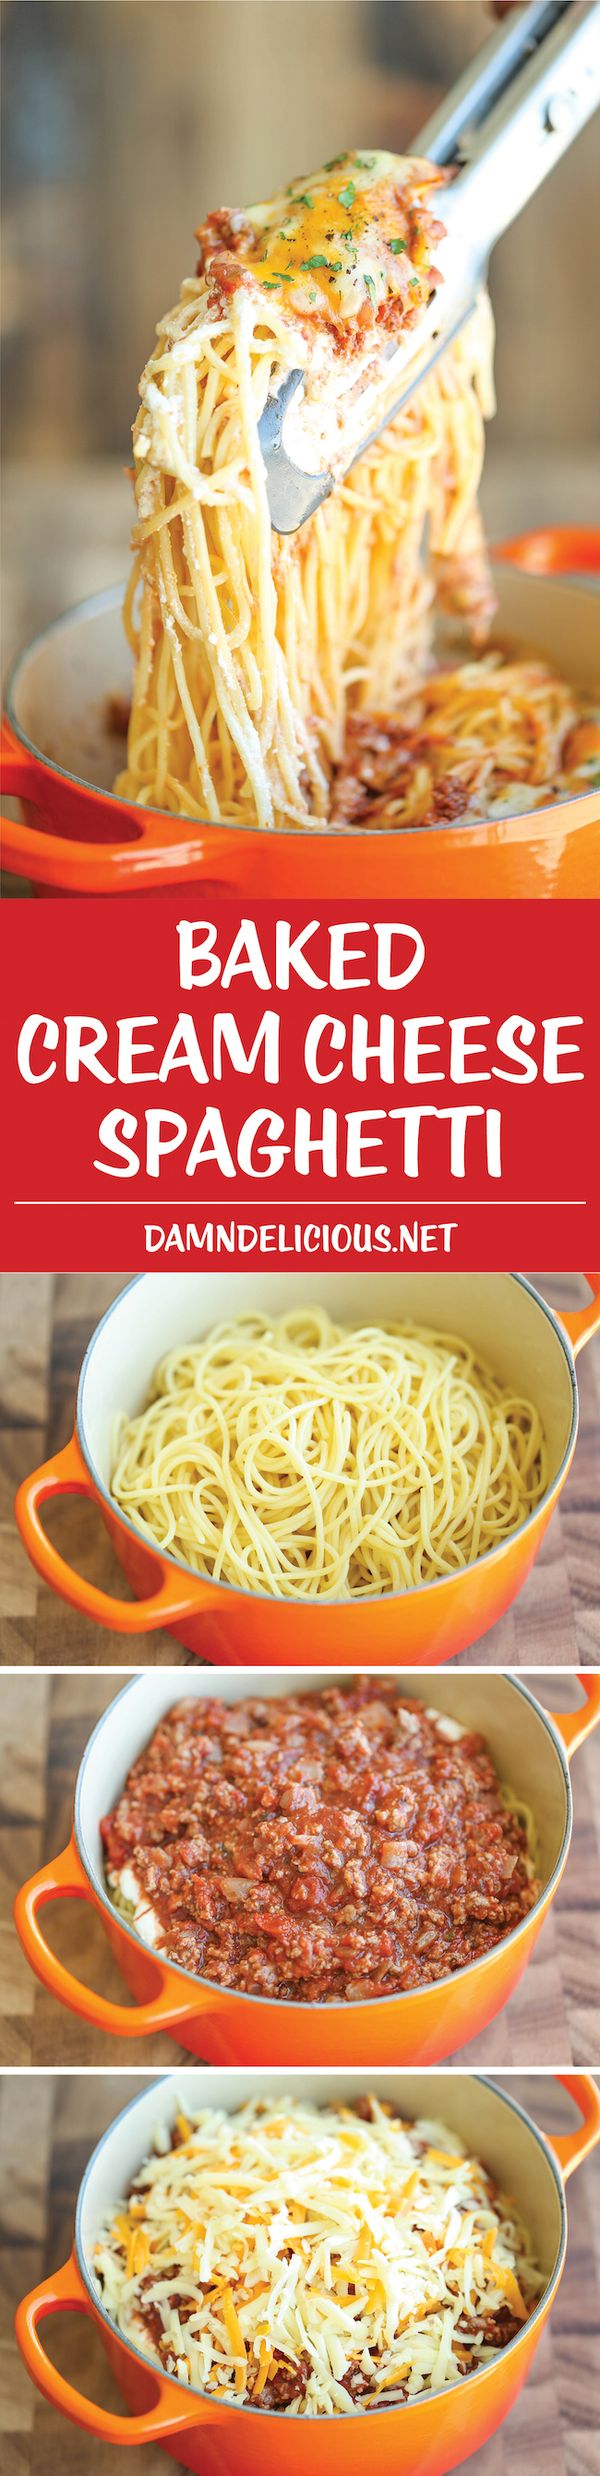 Baked Cream Cheese Spaghetti